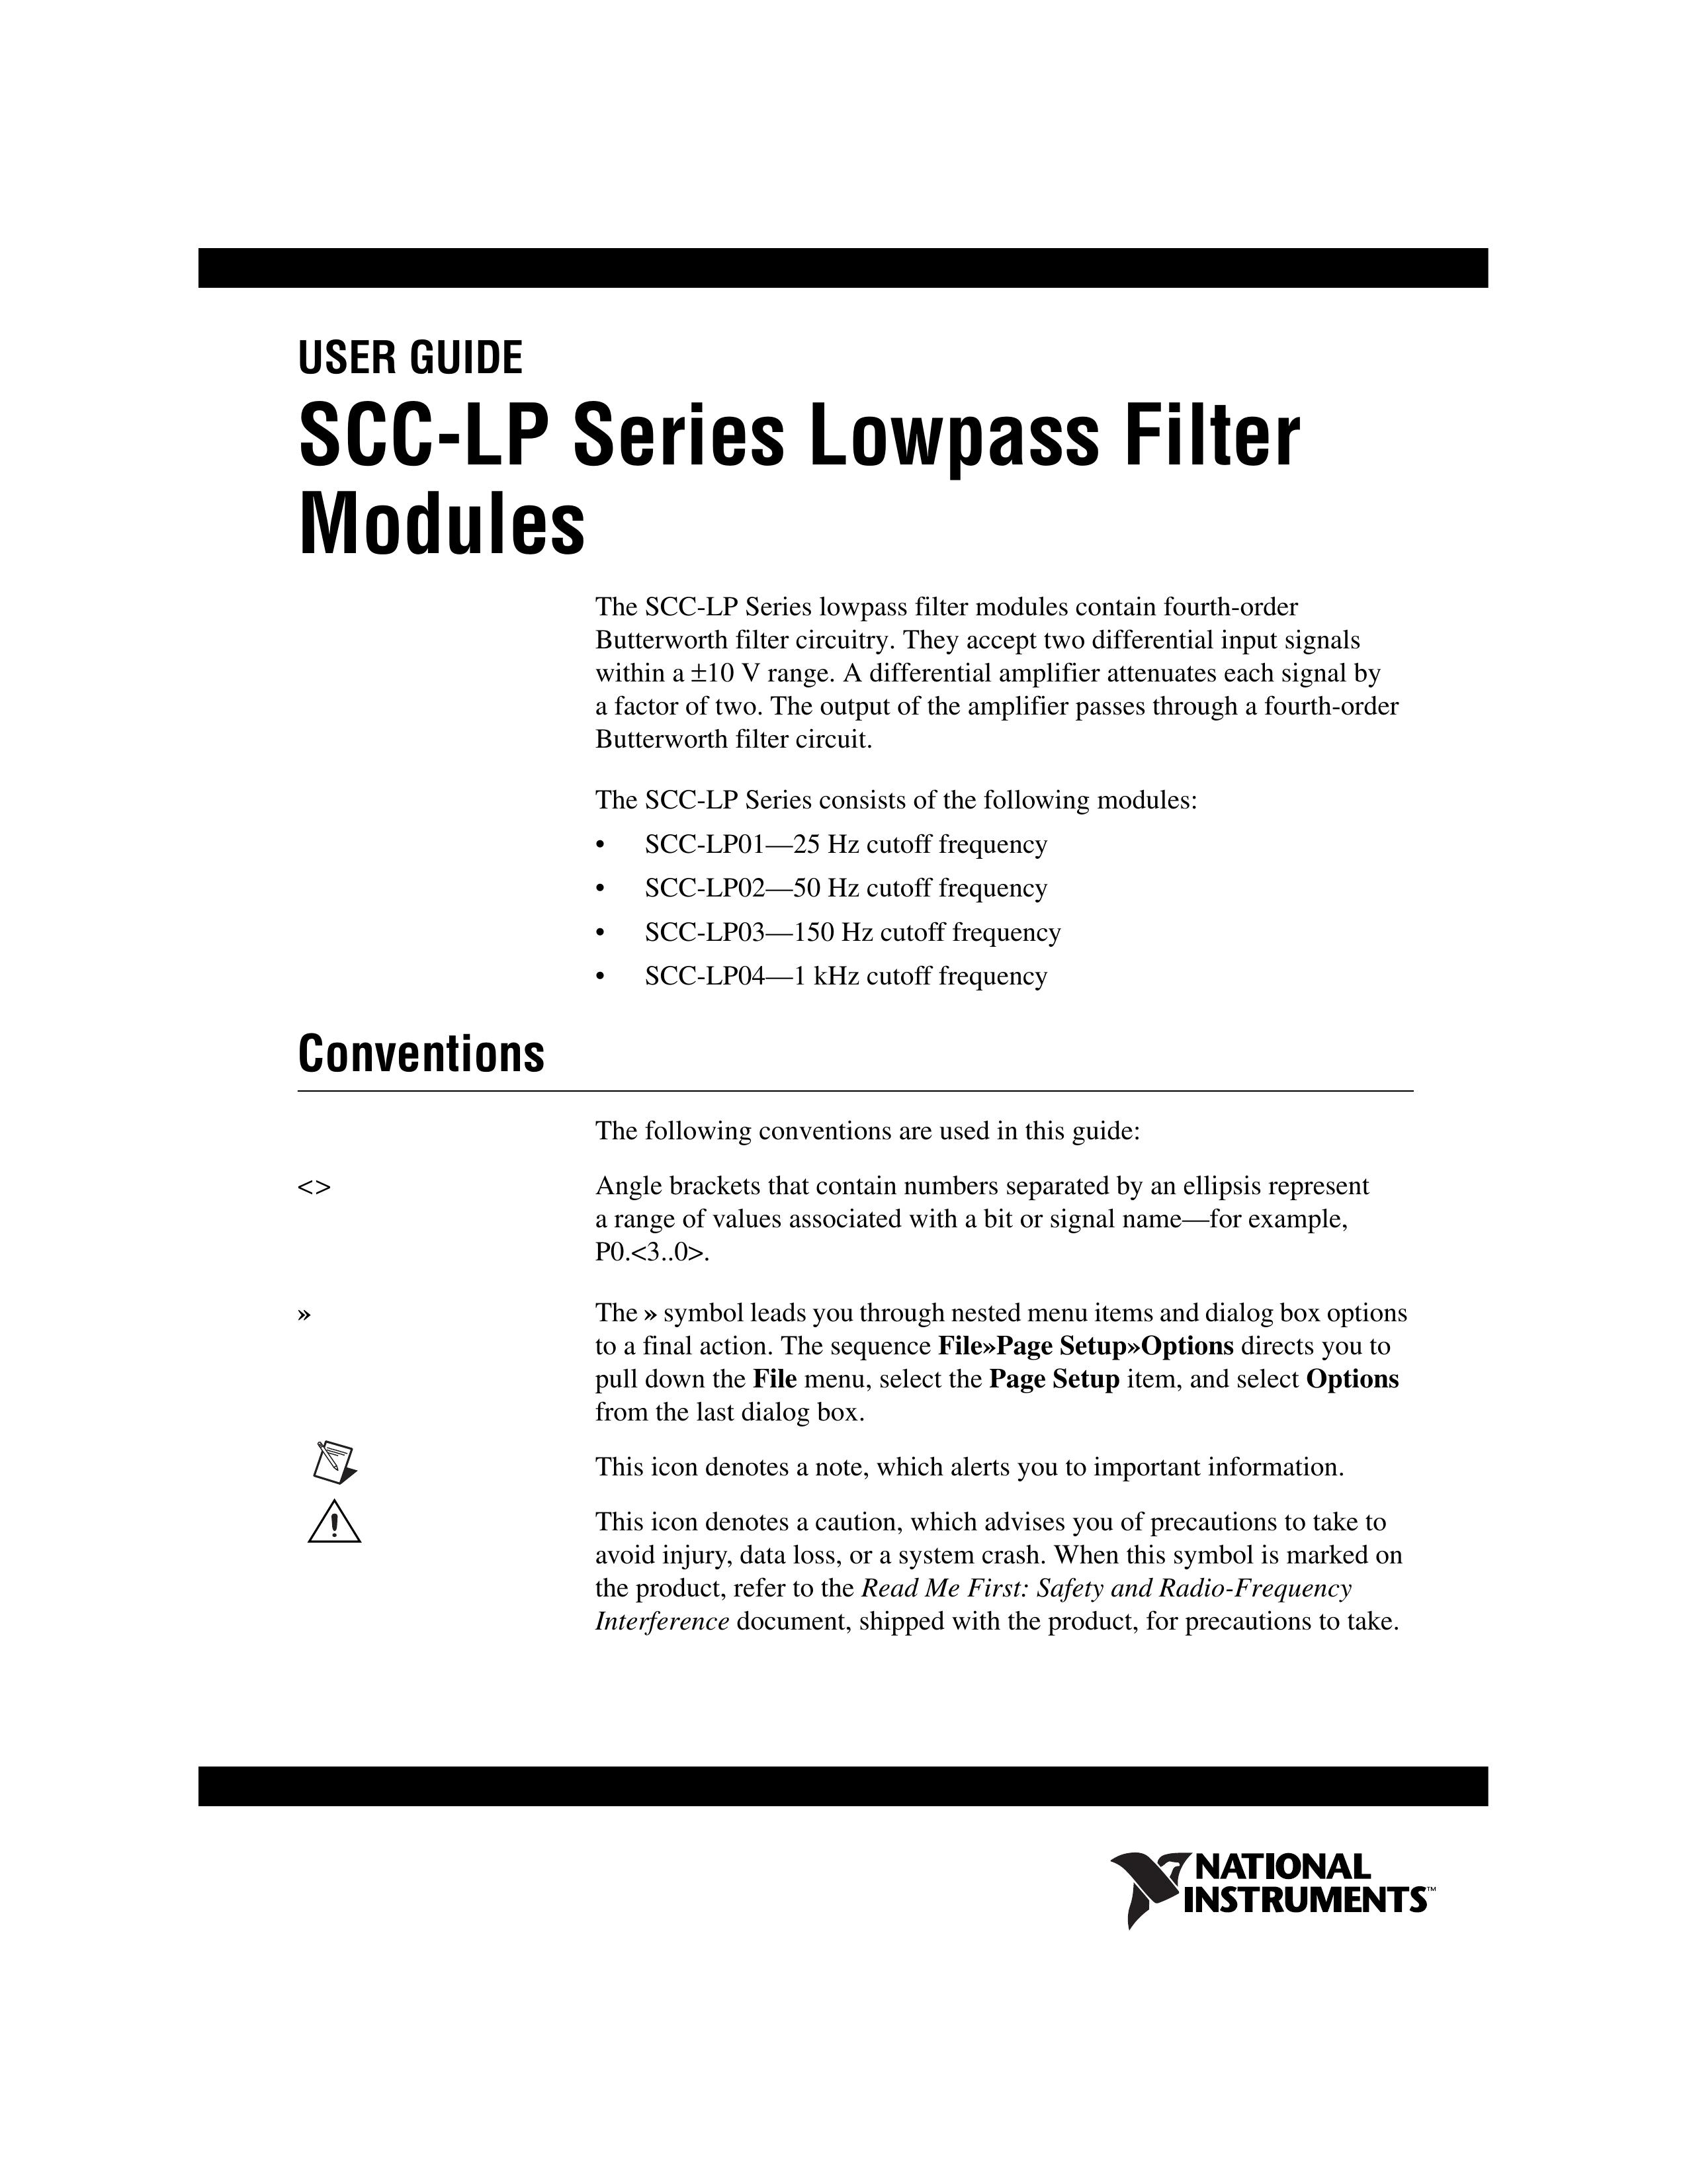 National Instruments SCC-LP04 Dryer Accessories User Manual